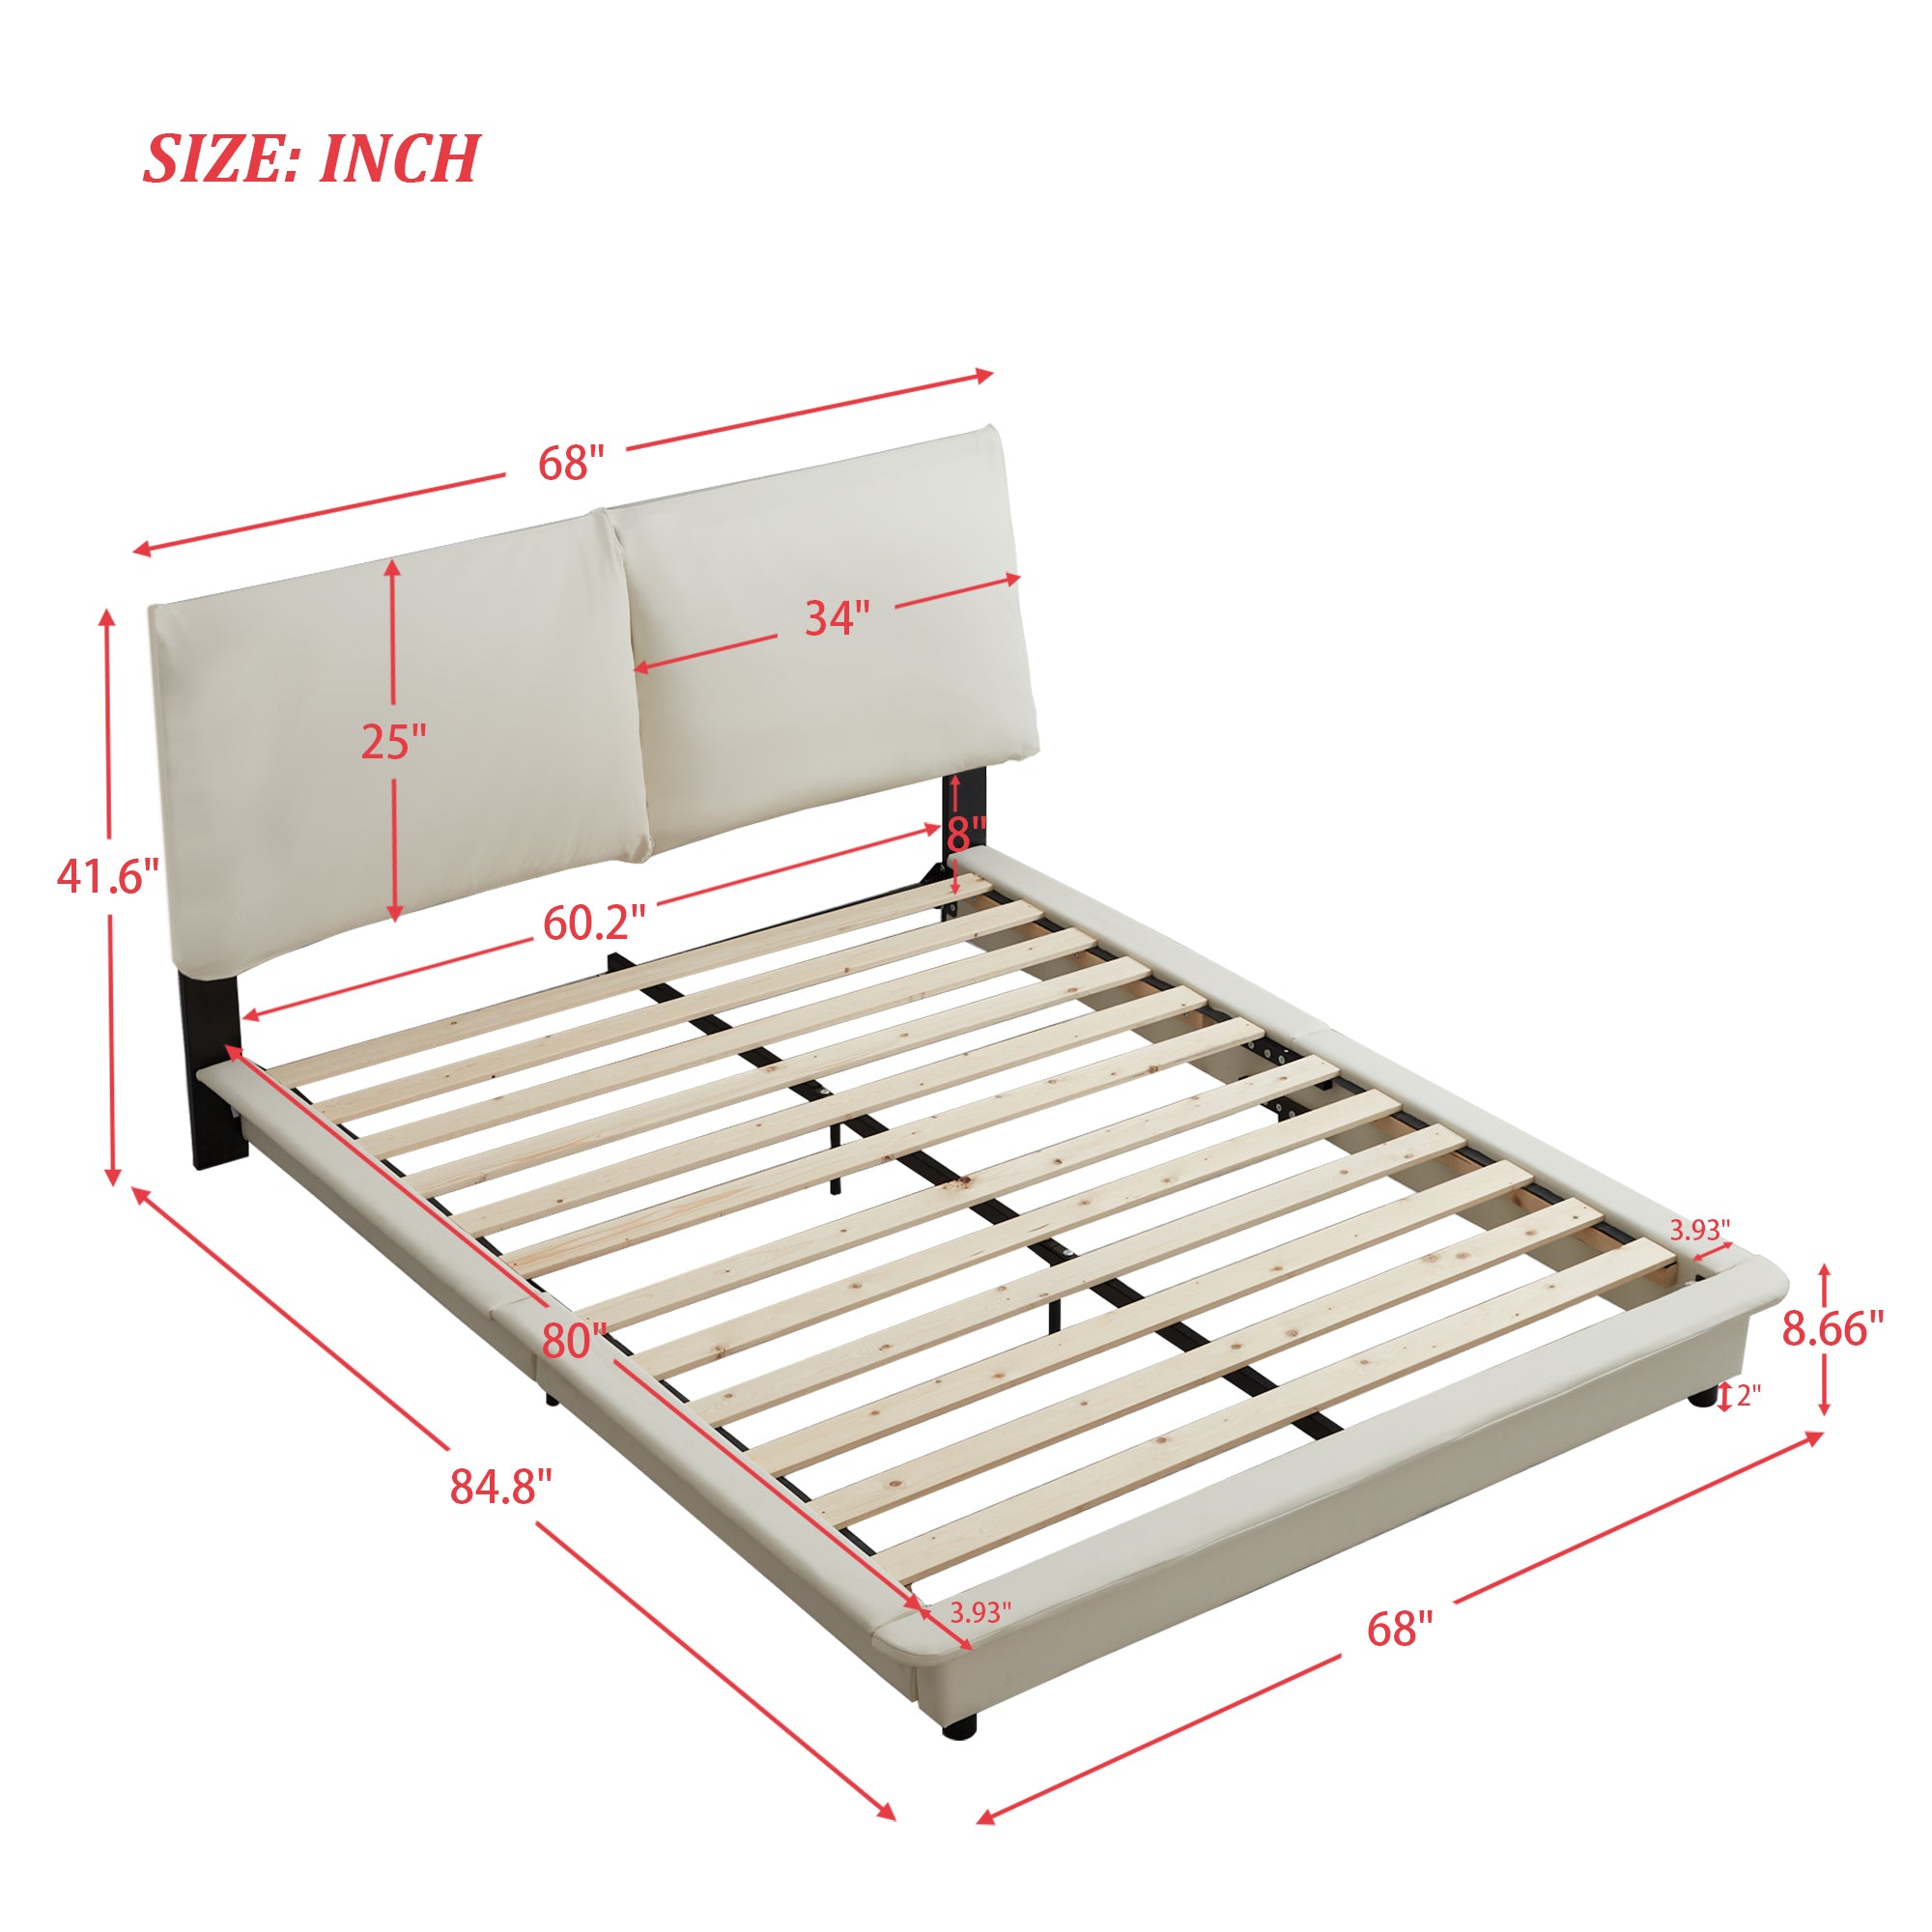 Queen Size Upholstered Platform Bed with Sensor Light white-upholstered